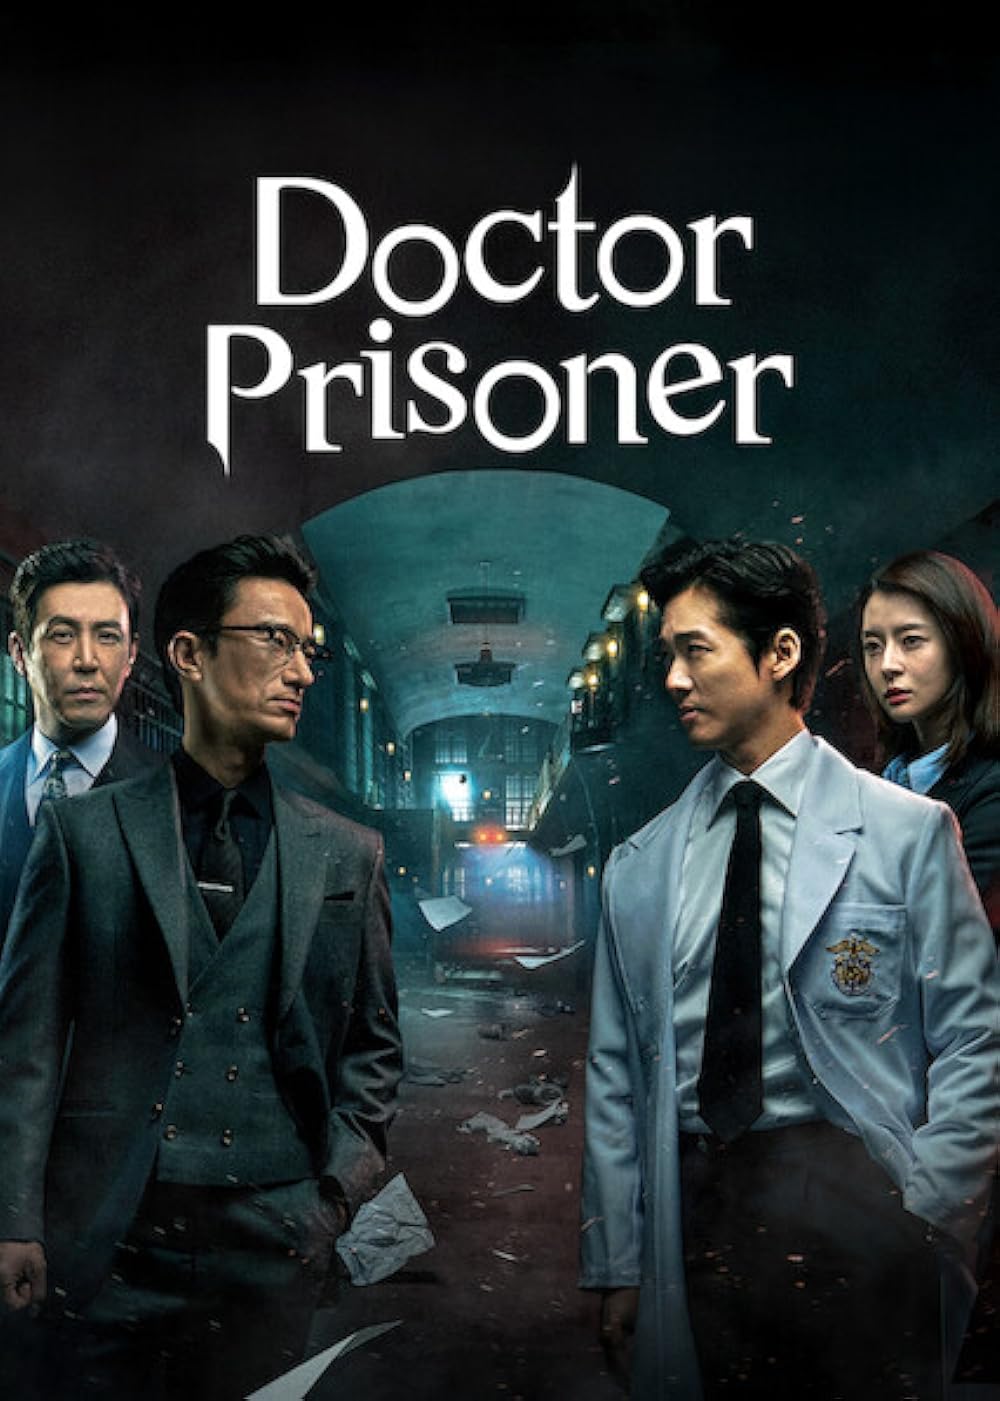 Doctor Prisoner ซีรีย์เกาหลี